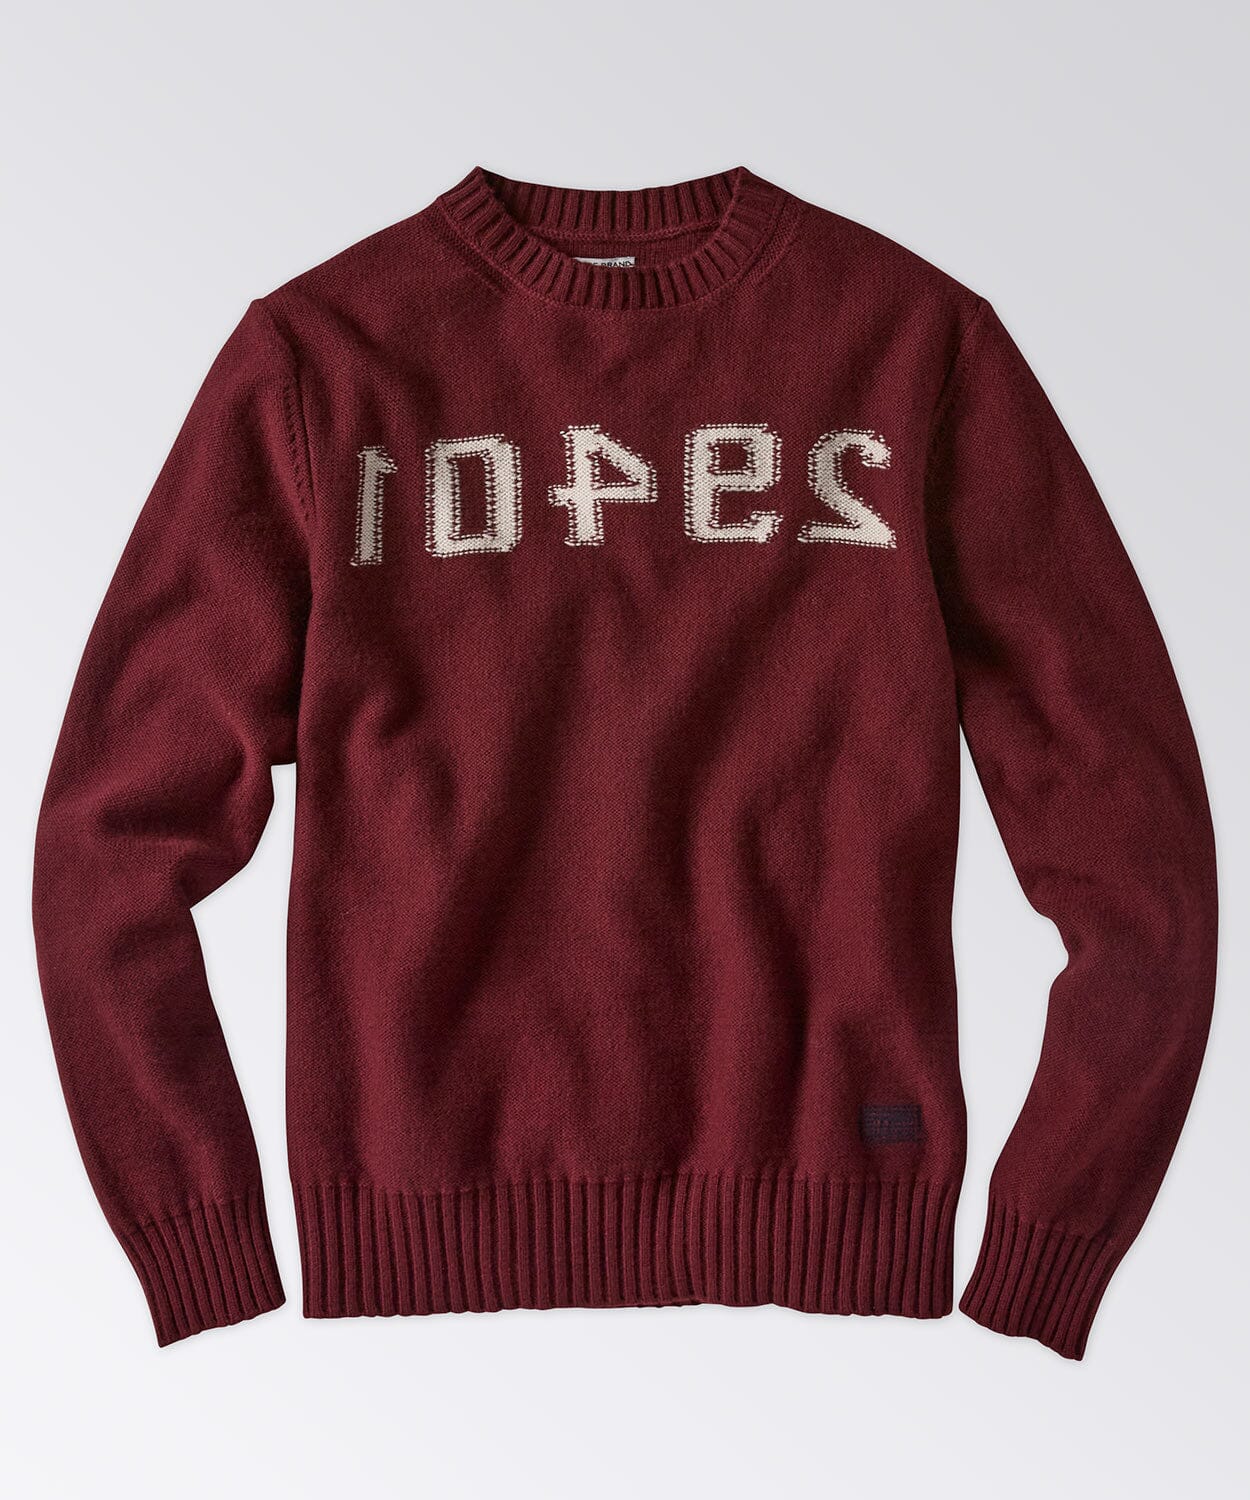 King Street Crew Sweater Sweaters OOBE BRAND Bordeaux S 